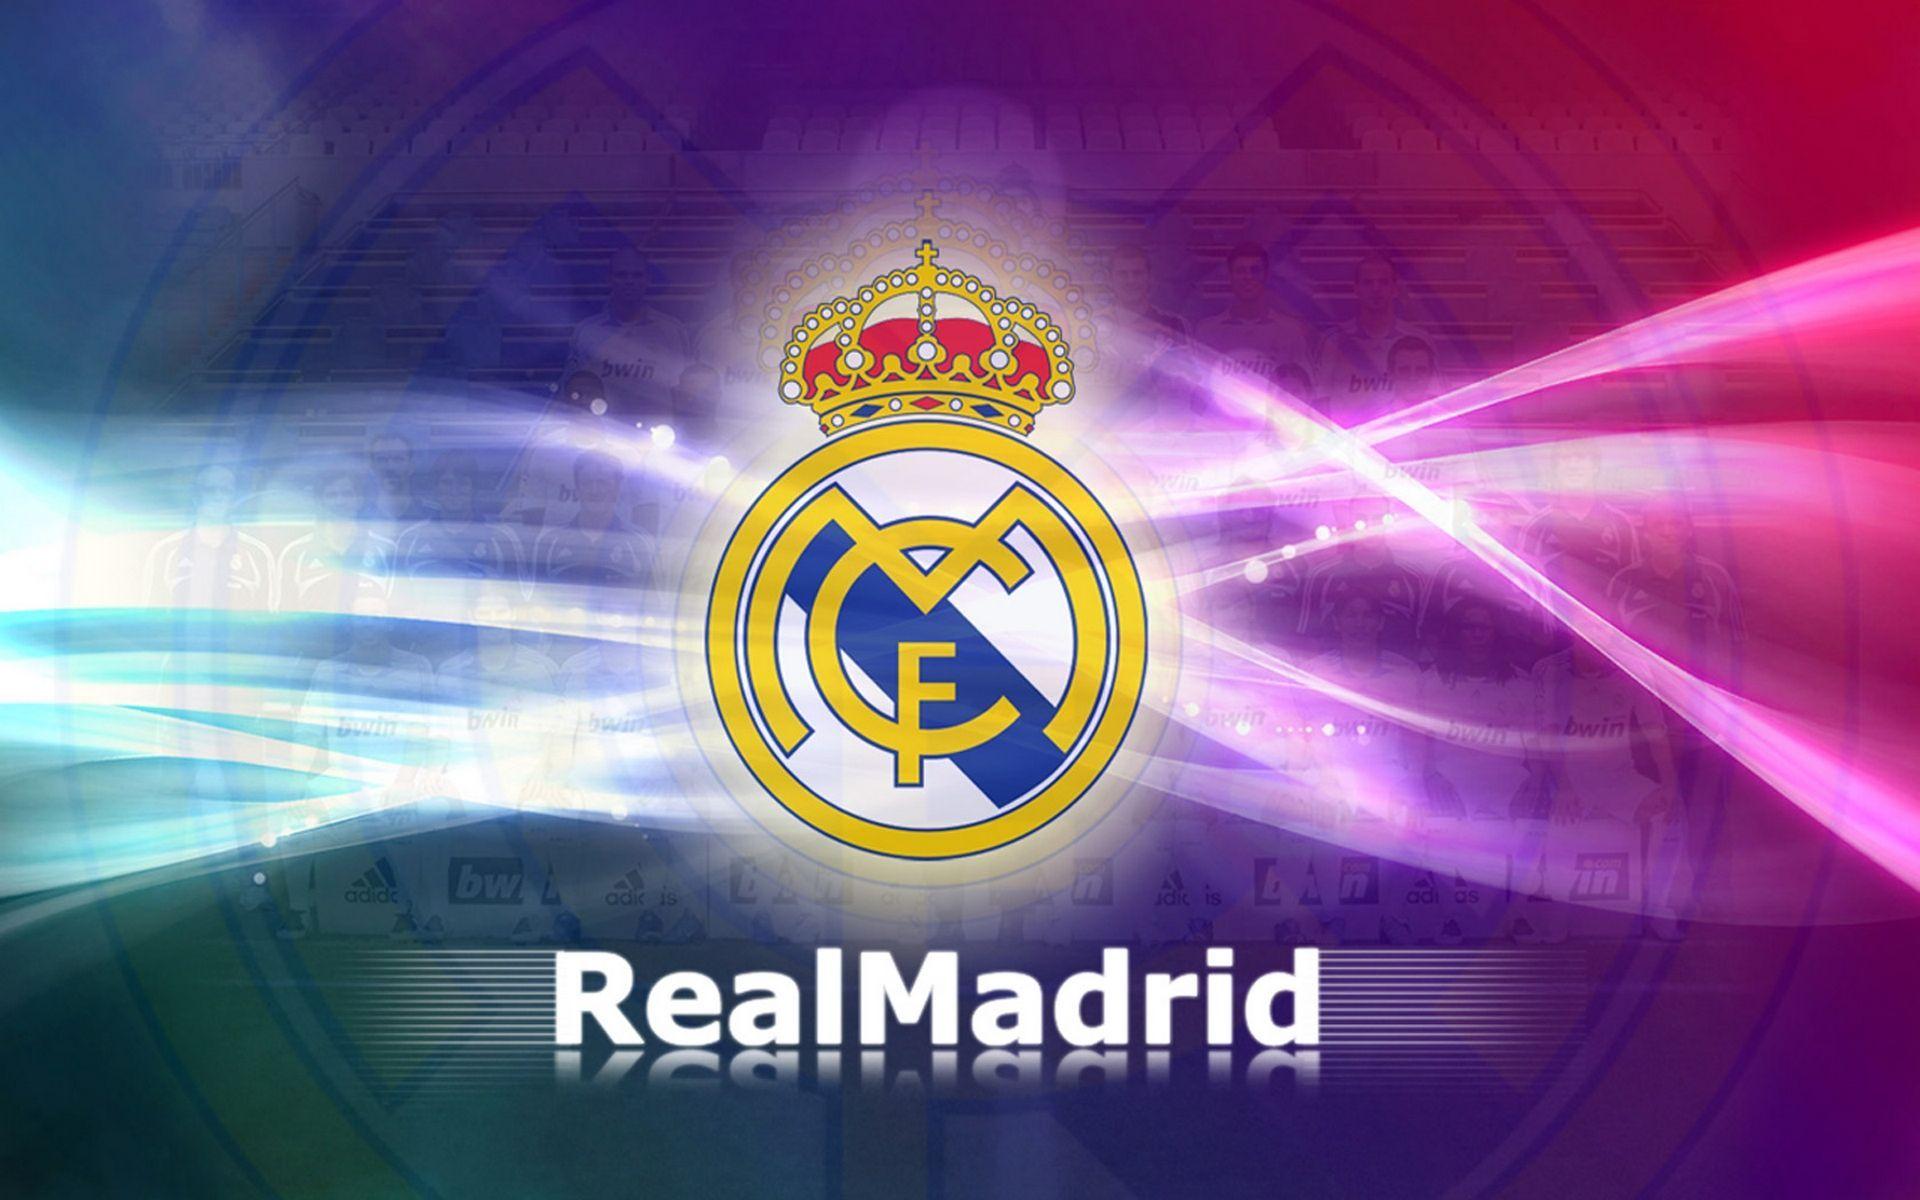 Real Madrid Uefa Champions League Wallpaper HD. Real madrid wallpaper, Madrid wallpaper, Real madrid logo wallpaper